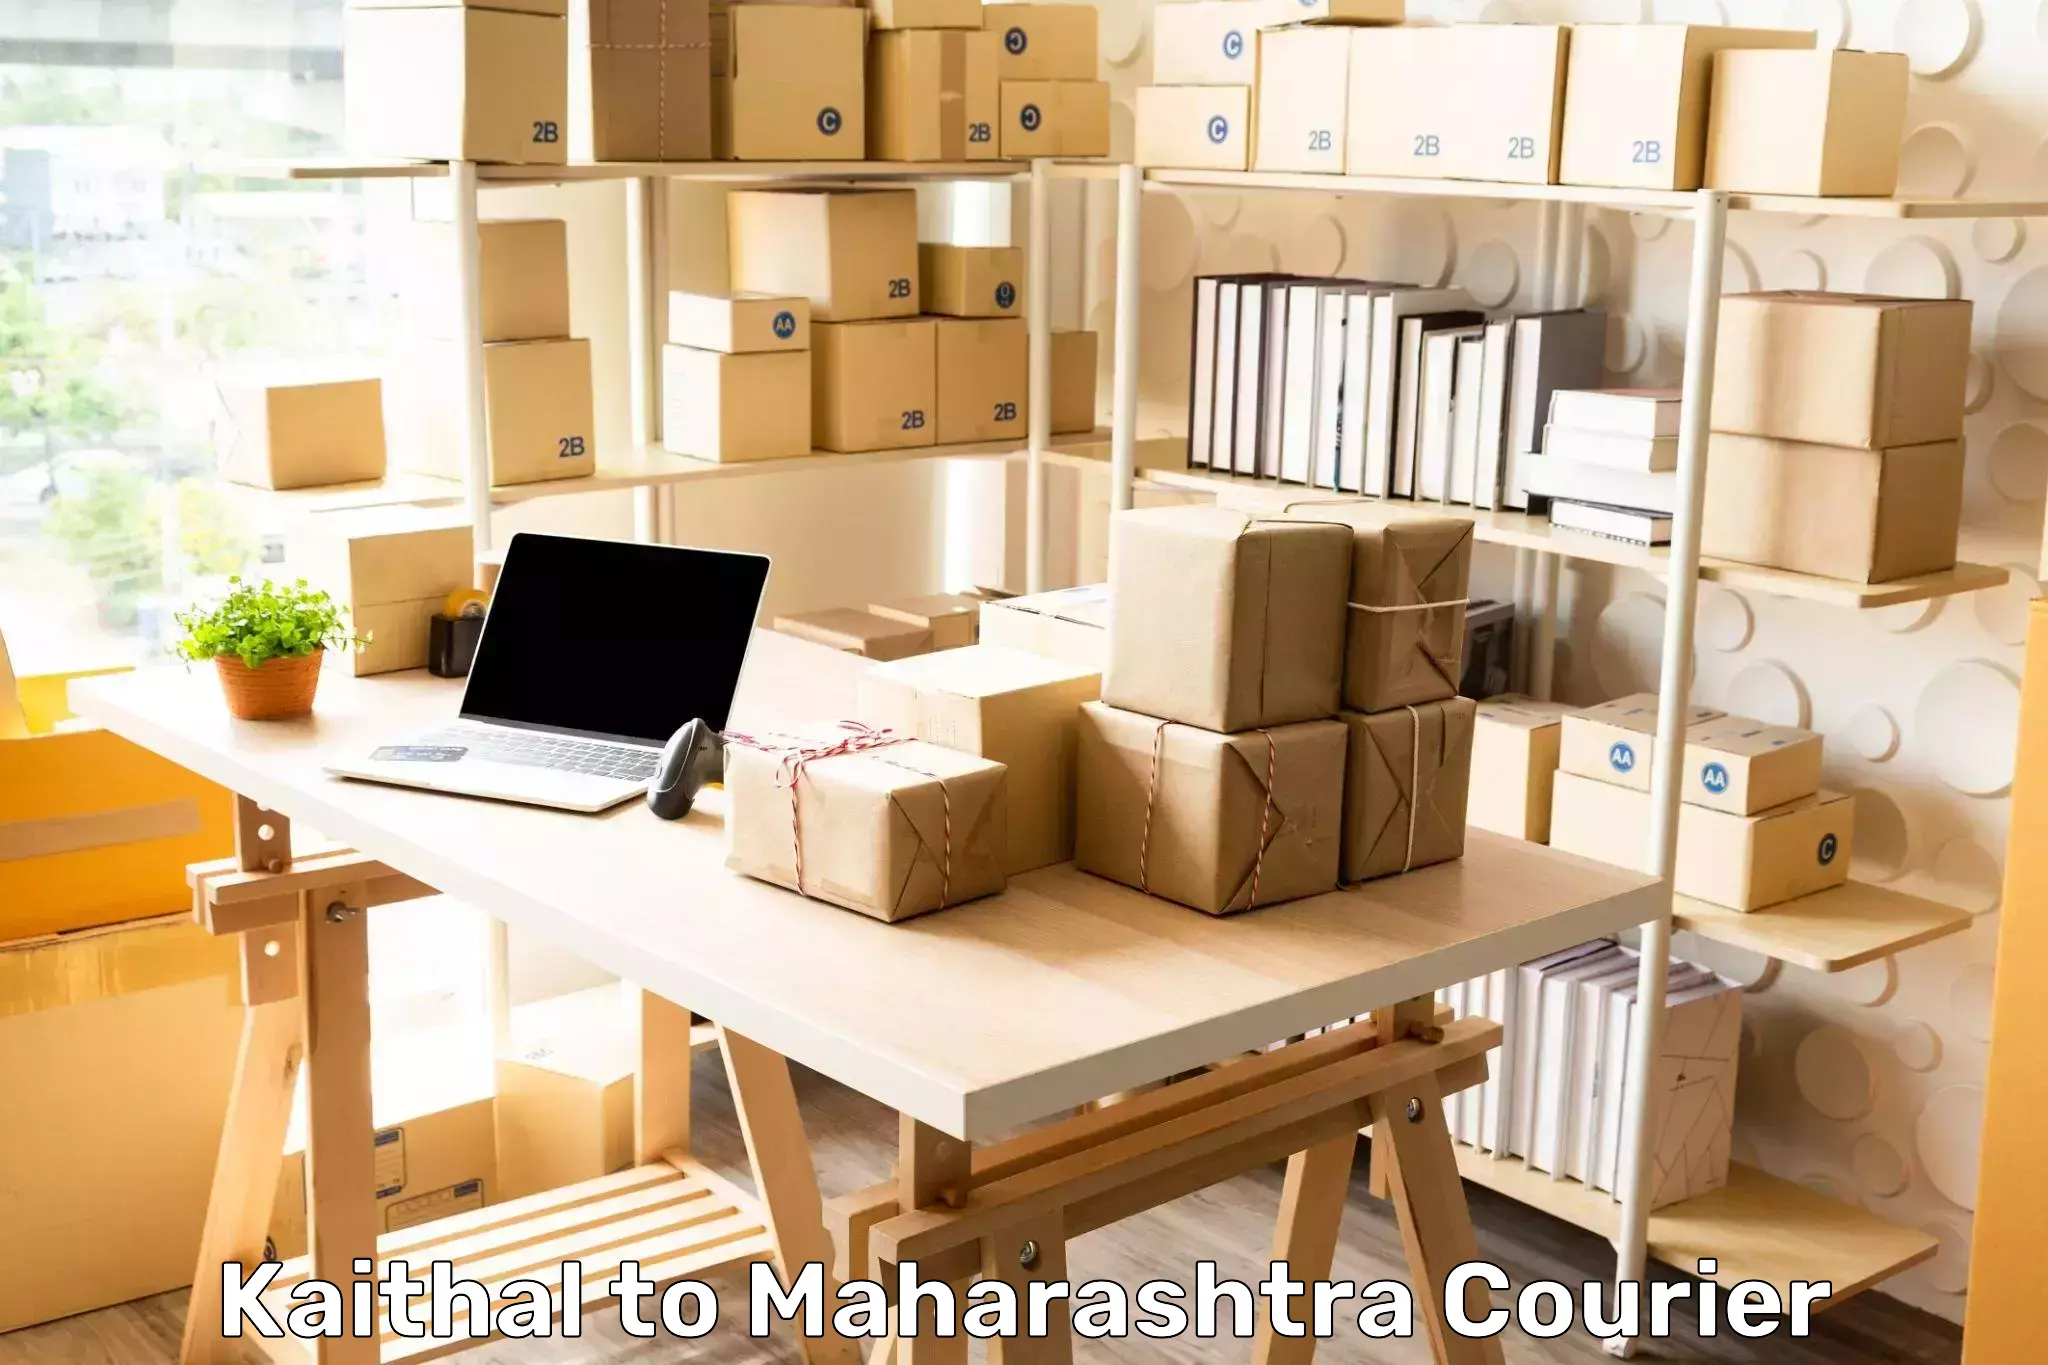 Door-to-door shipment in Kaithal to Maharashtra